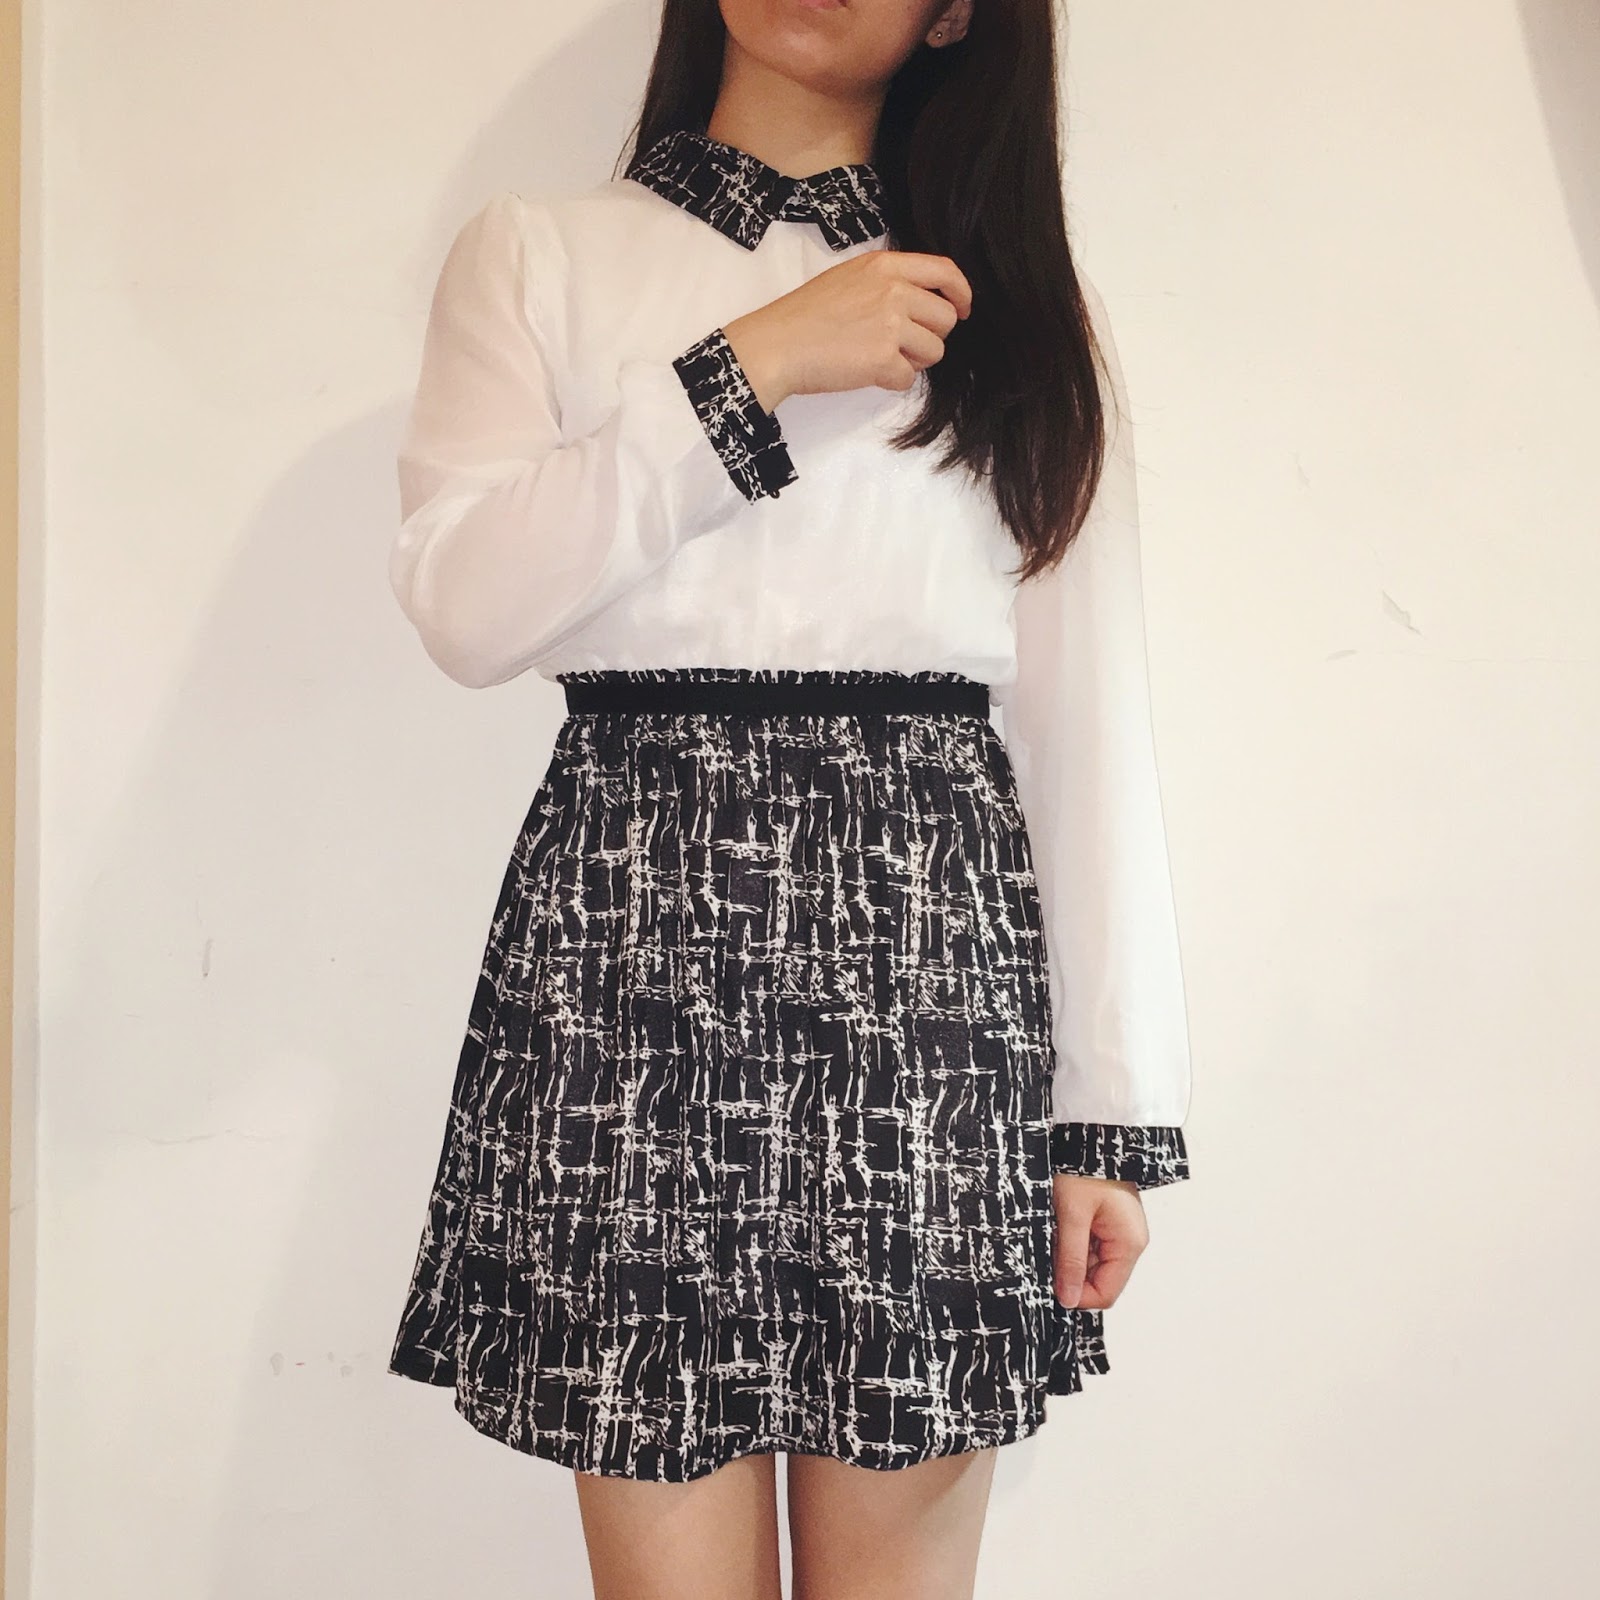 Banggood Dress Outfit- Black and White Dress 